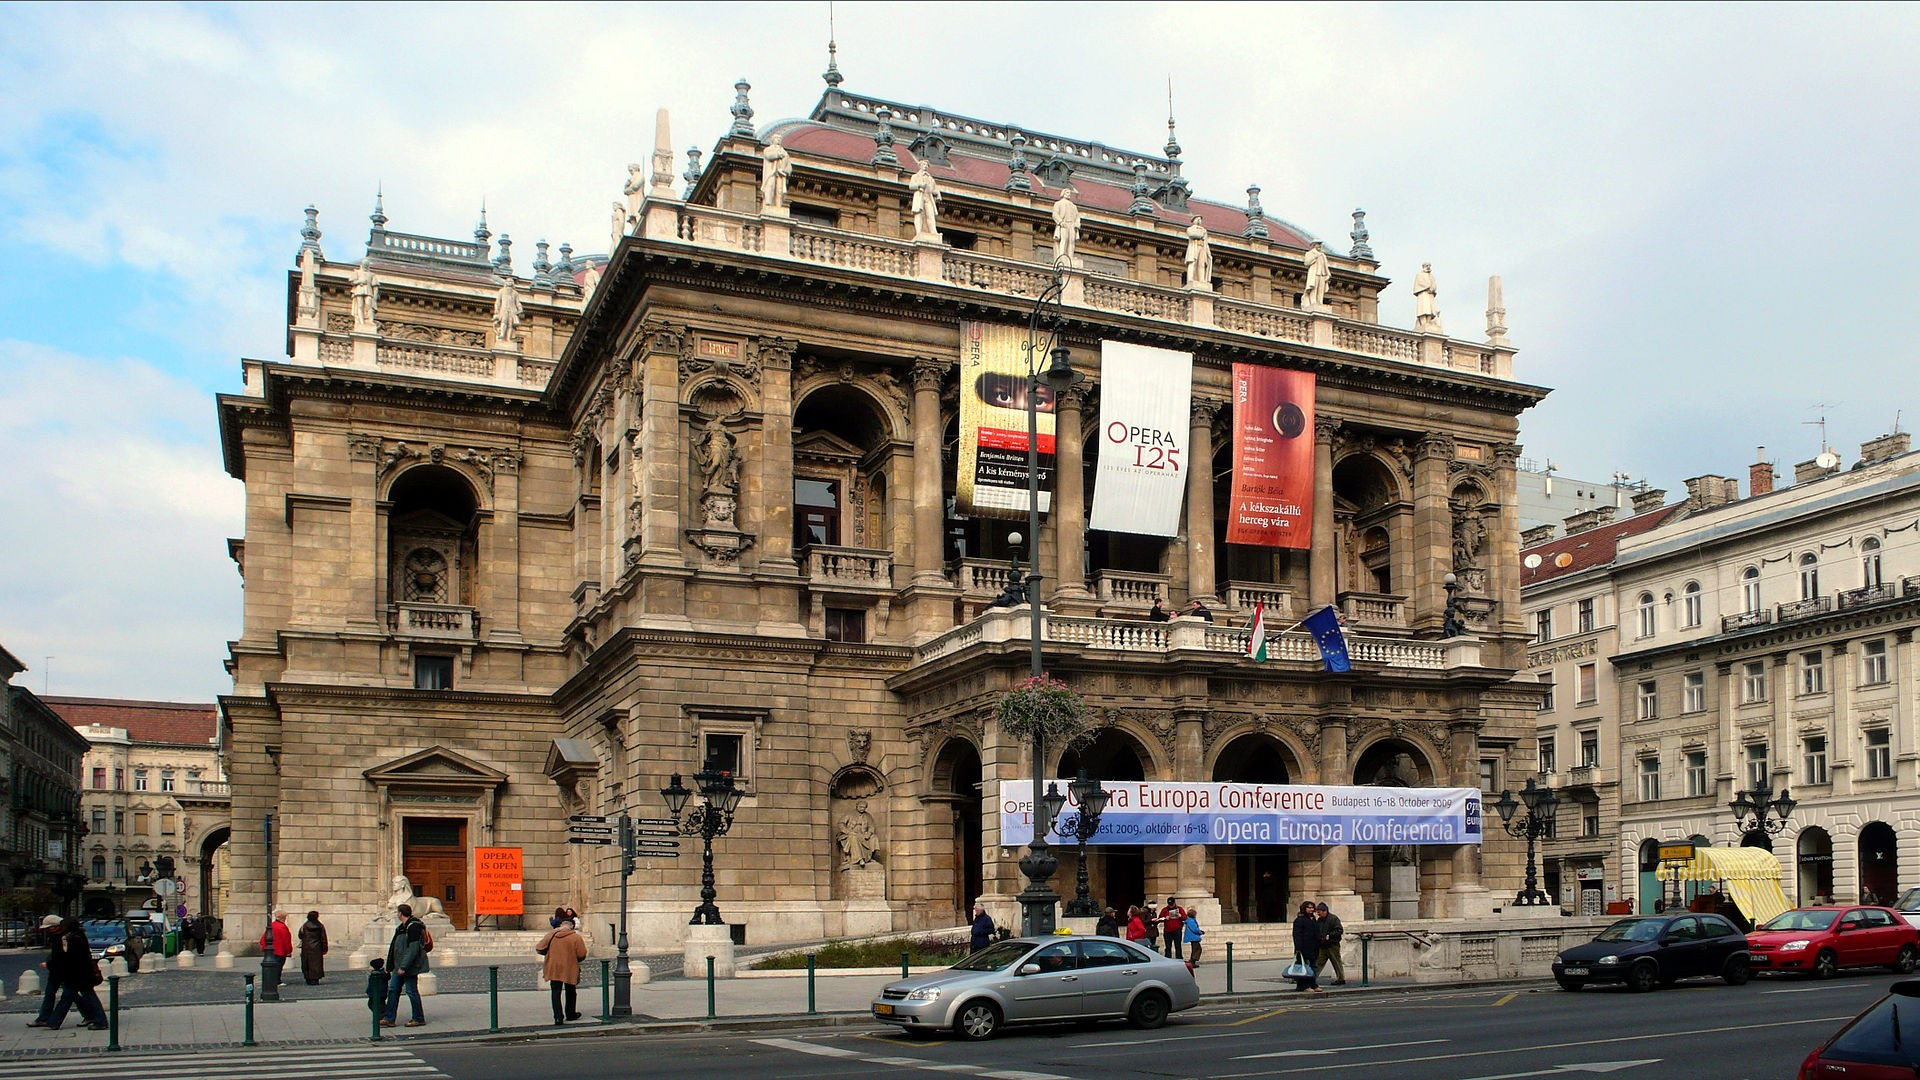 De Andrea Puggioni - Teatro dell'OperaUploaded by Szczebrzeszynski, CC BY 2.0, https://commons.wikimedia.org/w/index.php?curid=9926343